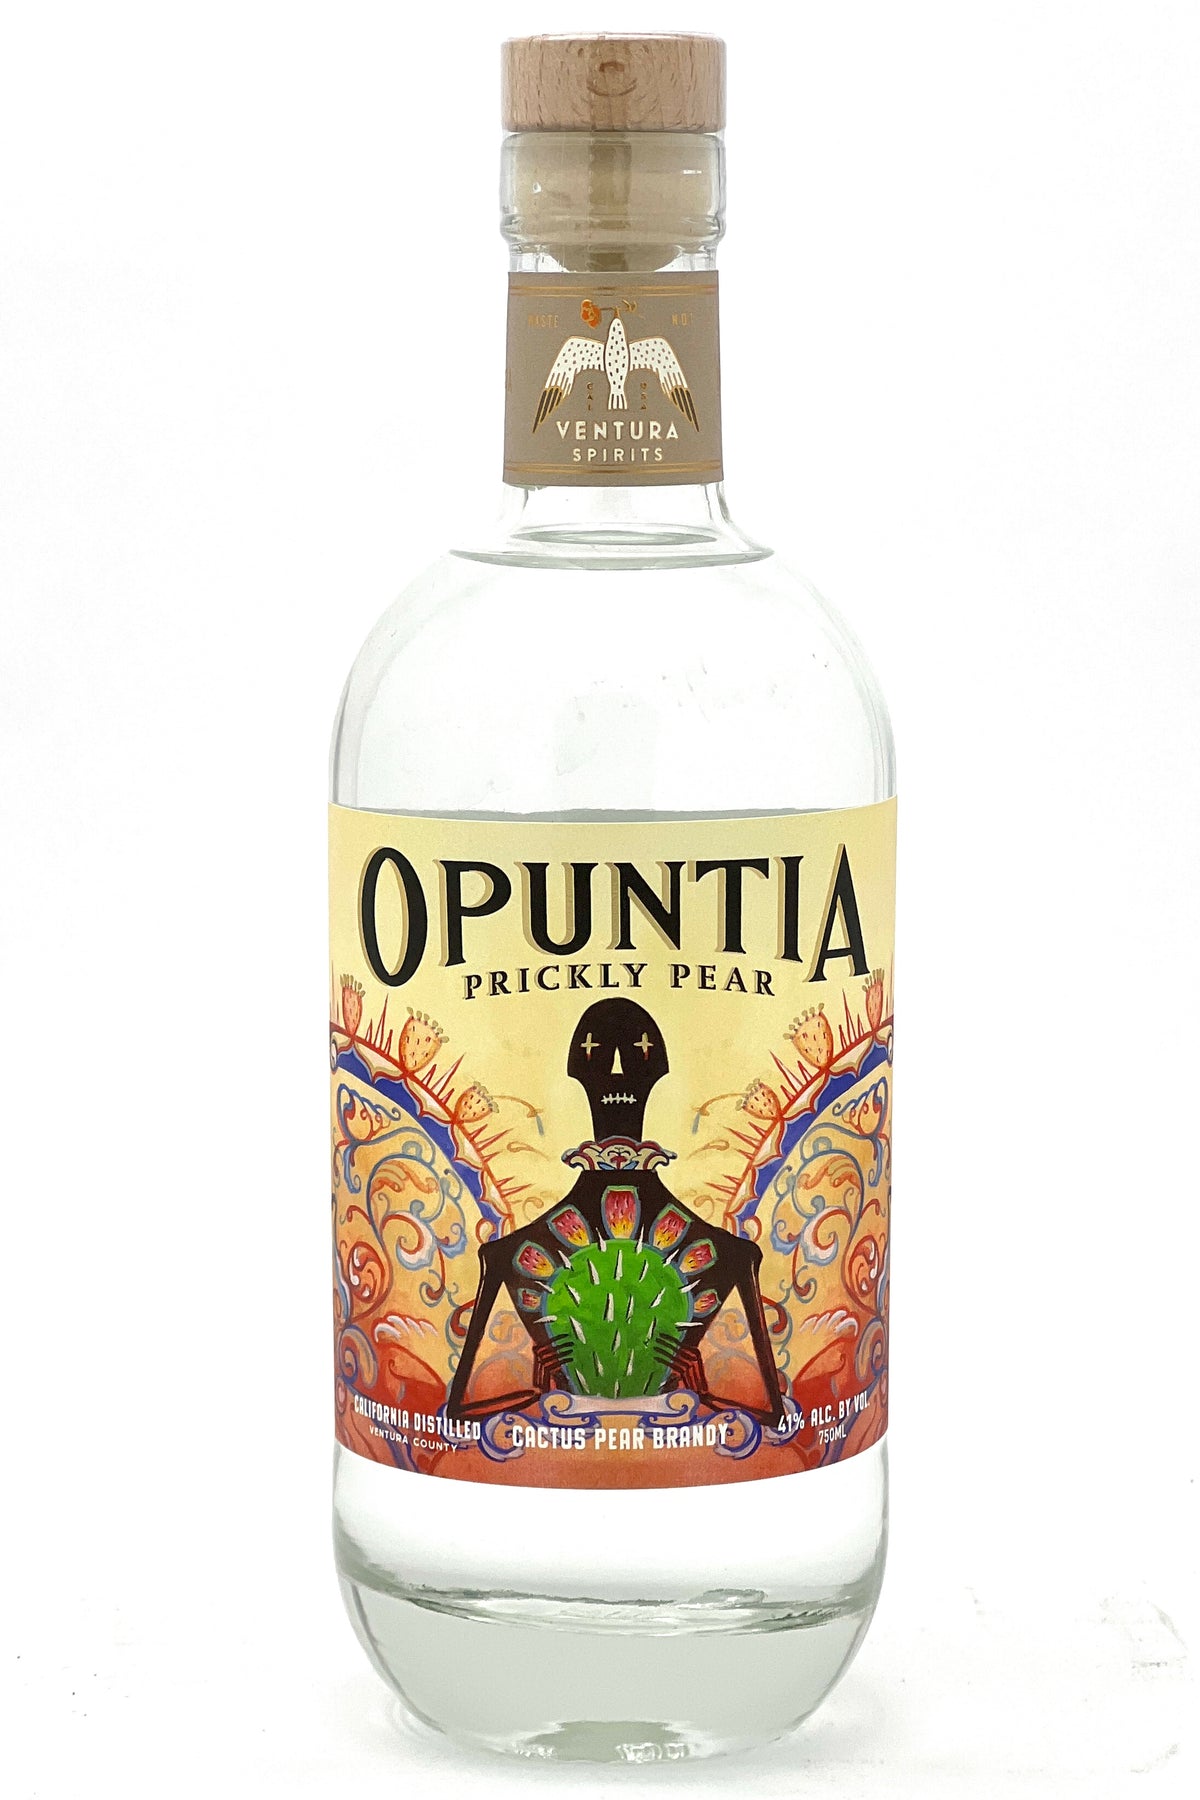 Ventura Spirits Opuntia Prickly Pear Cactus Brandy